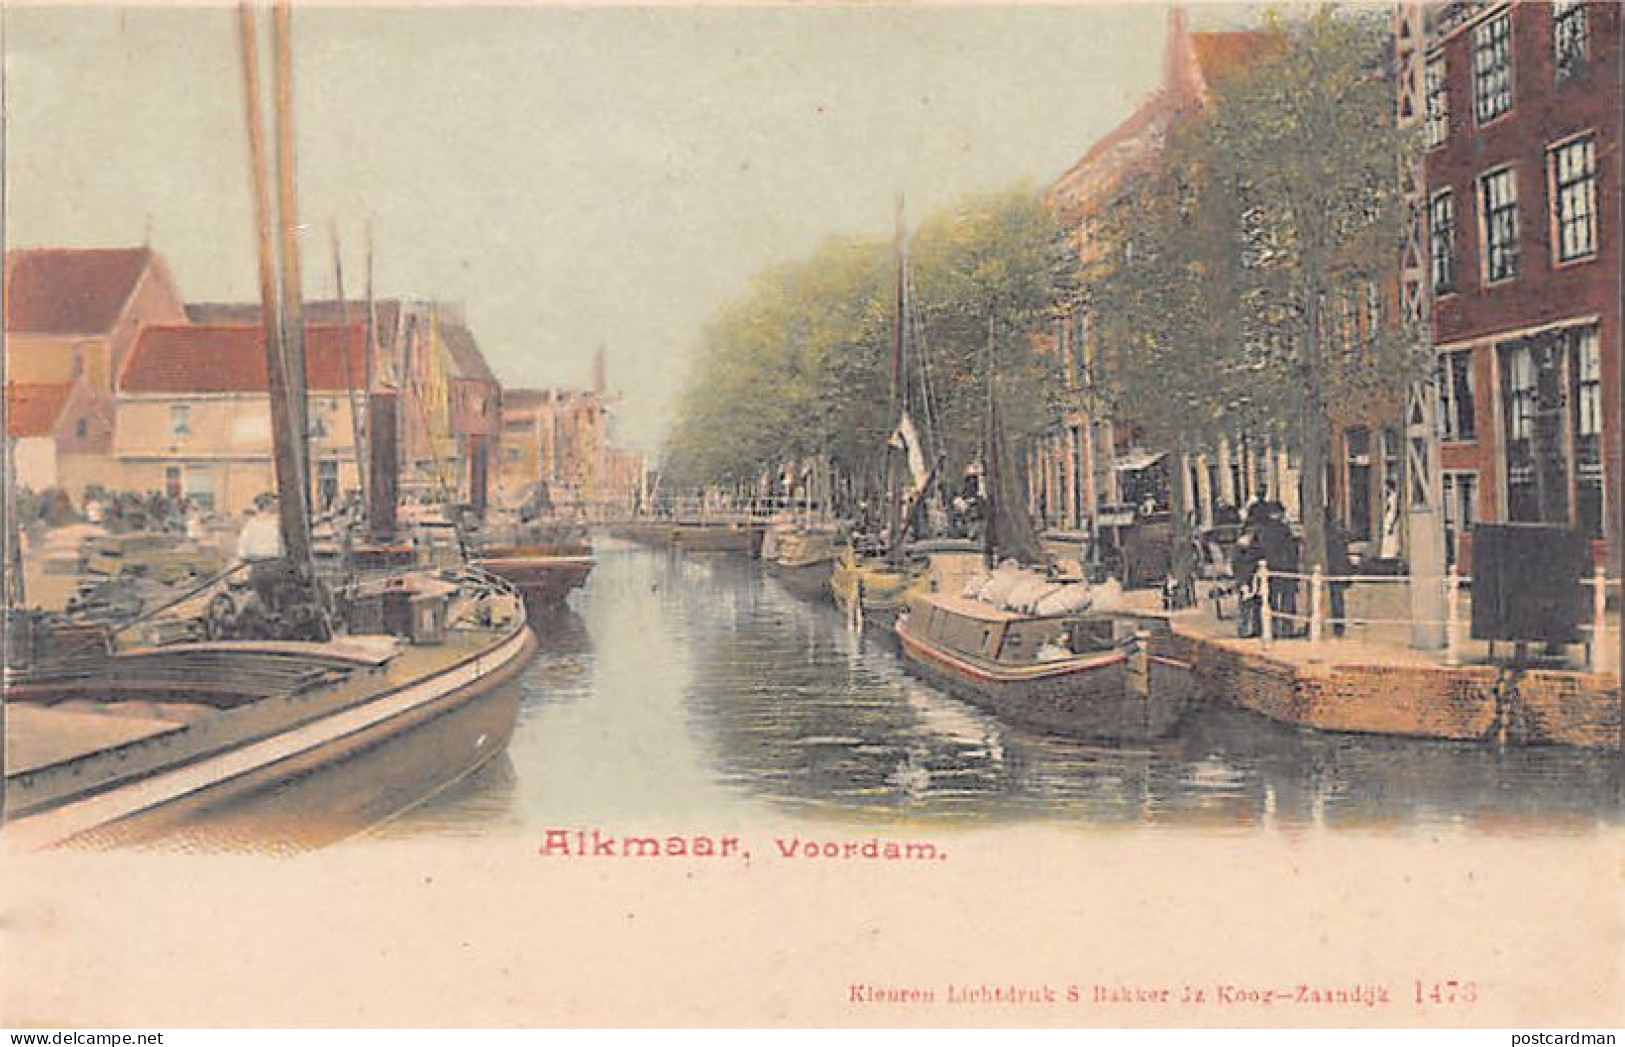 ALKMAAR (NH) Voordam - Uitg. S. Bakker 1473 - Alkmaar